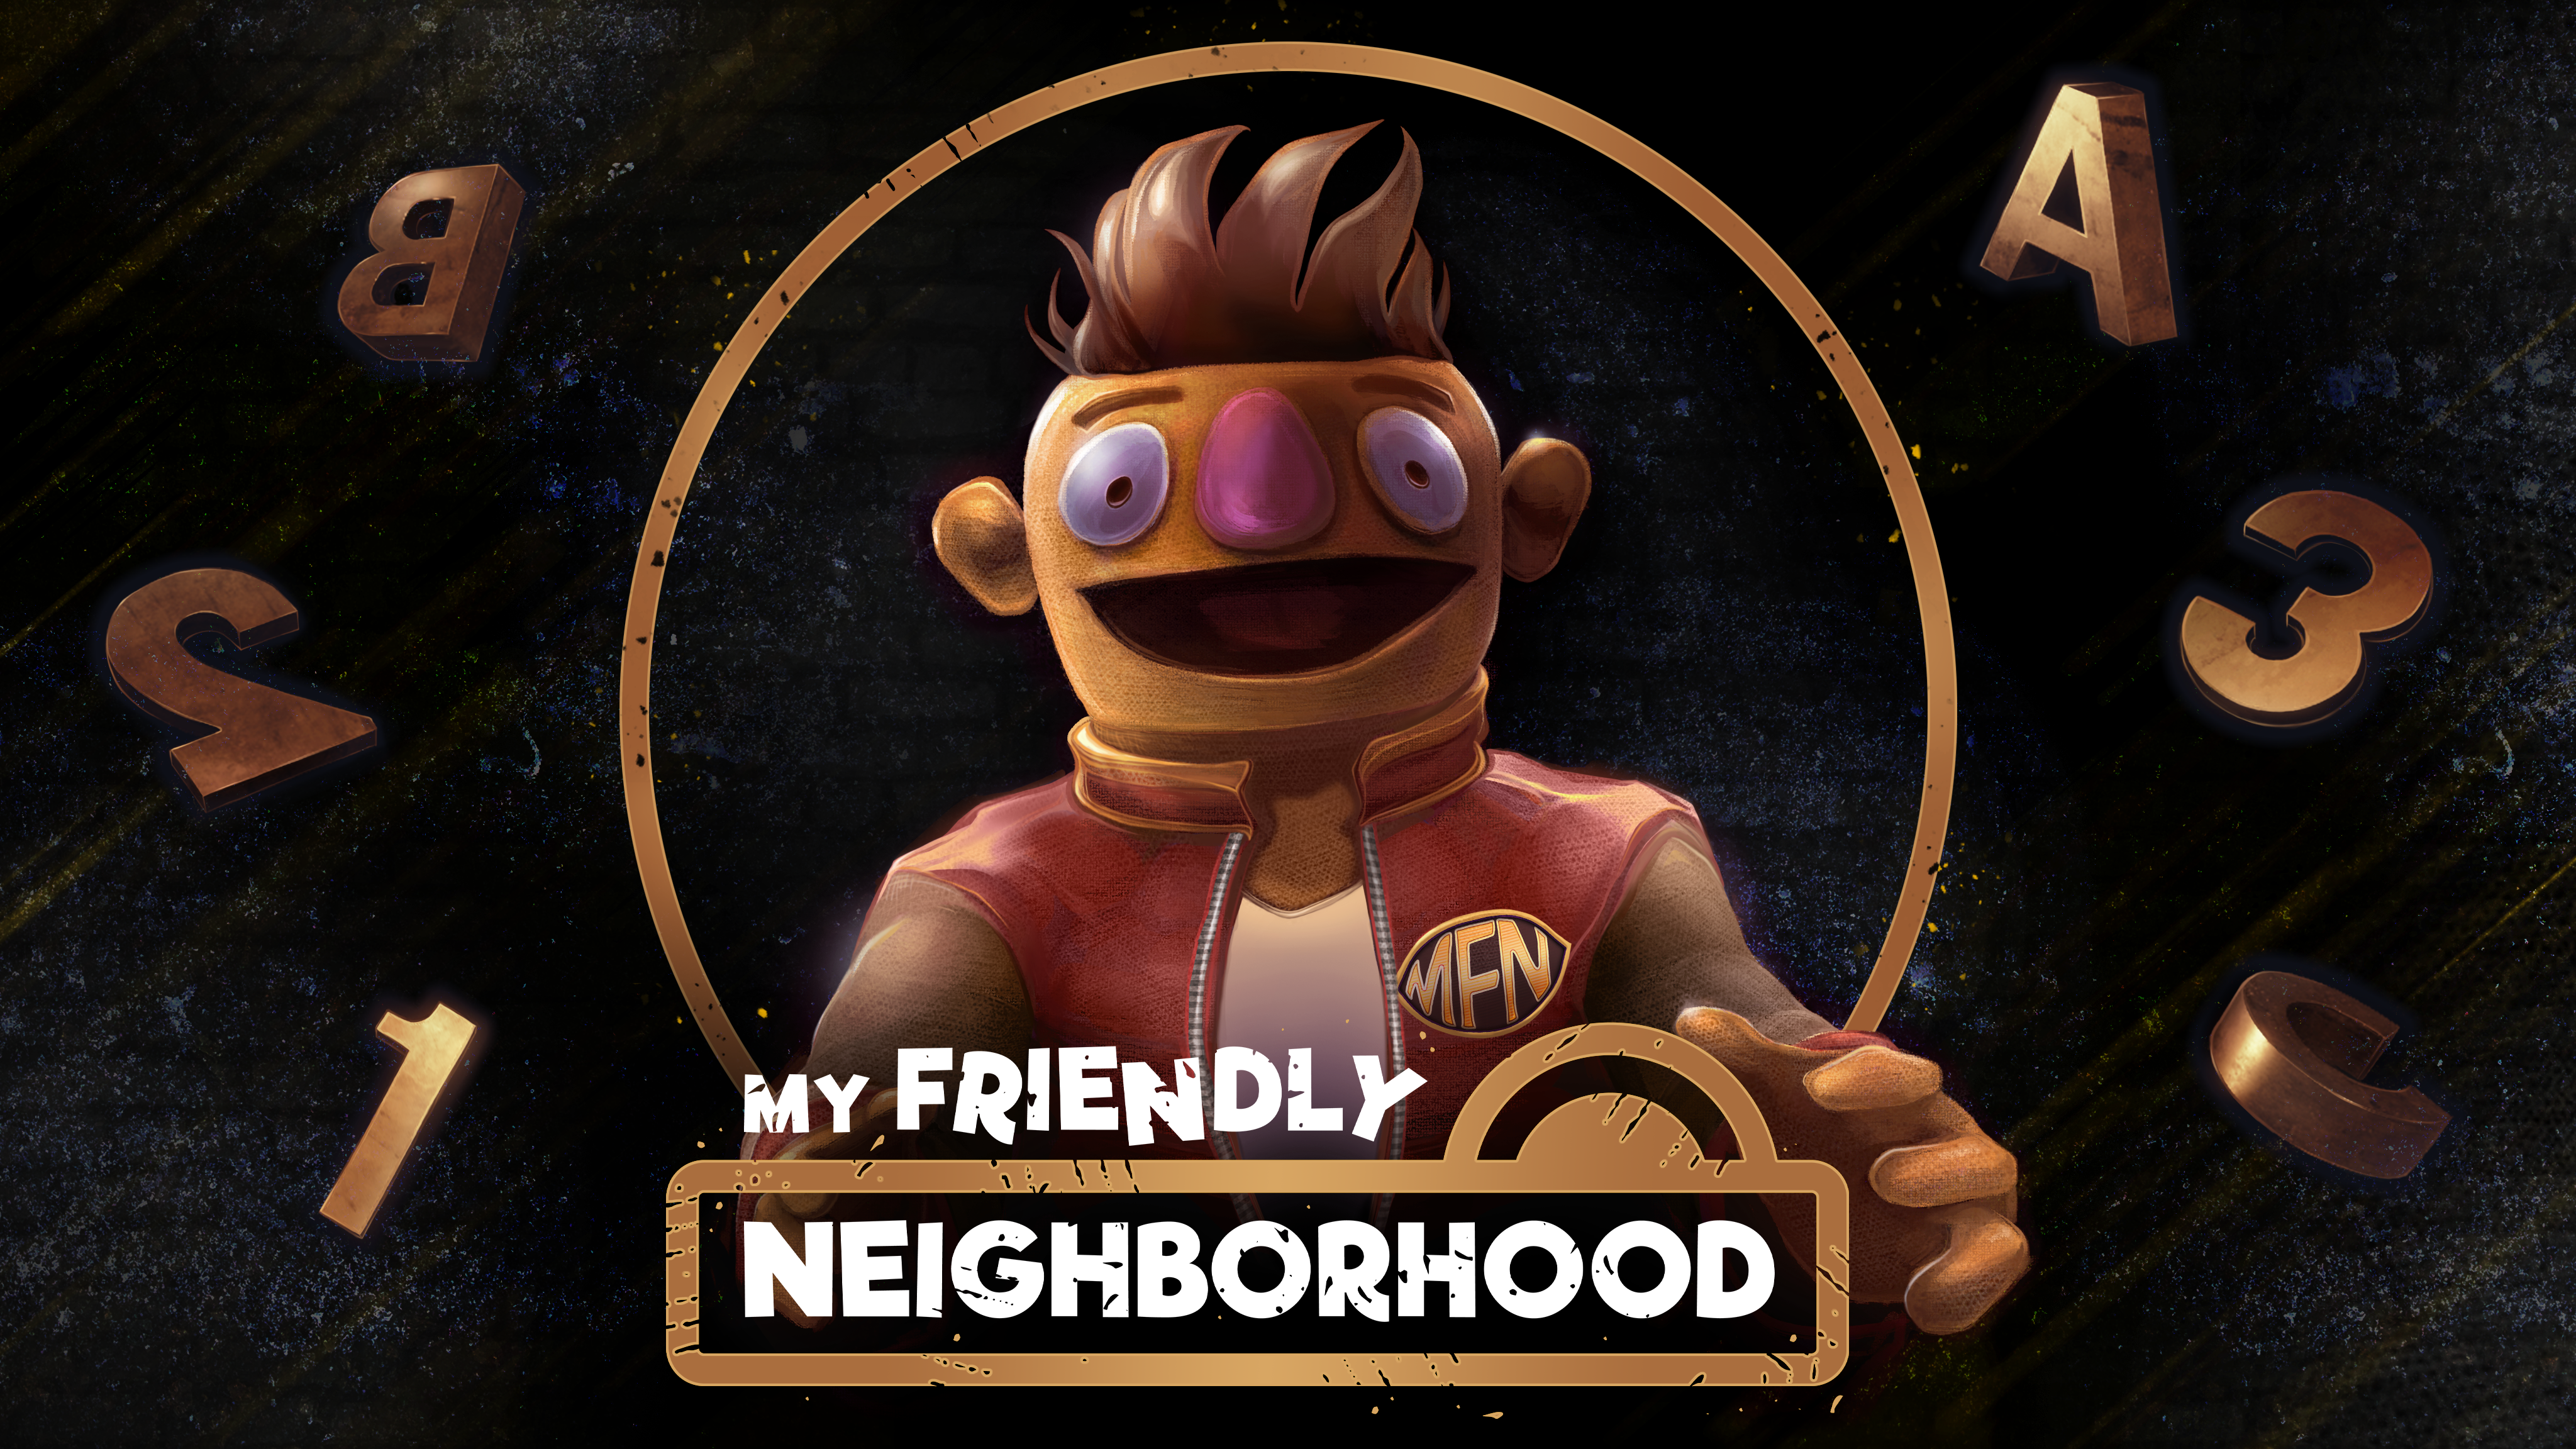 Friend lives far. My friendly neighborhood игра. My friendly neighborhood логотип. Май френдли нейборхуд. My friendly neighborhood оружие.